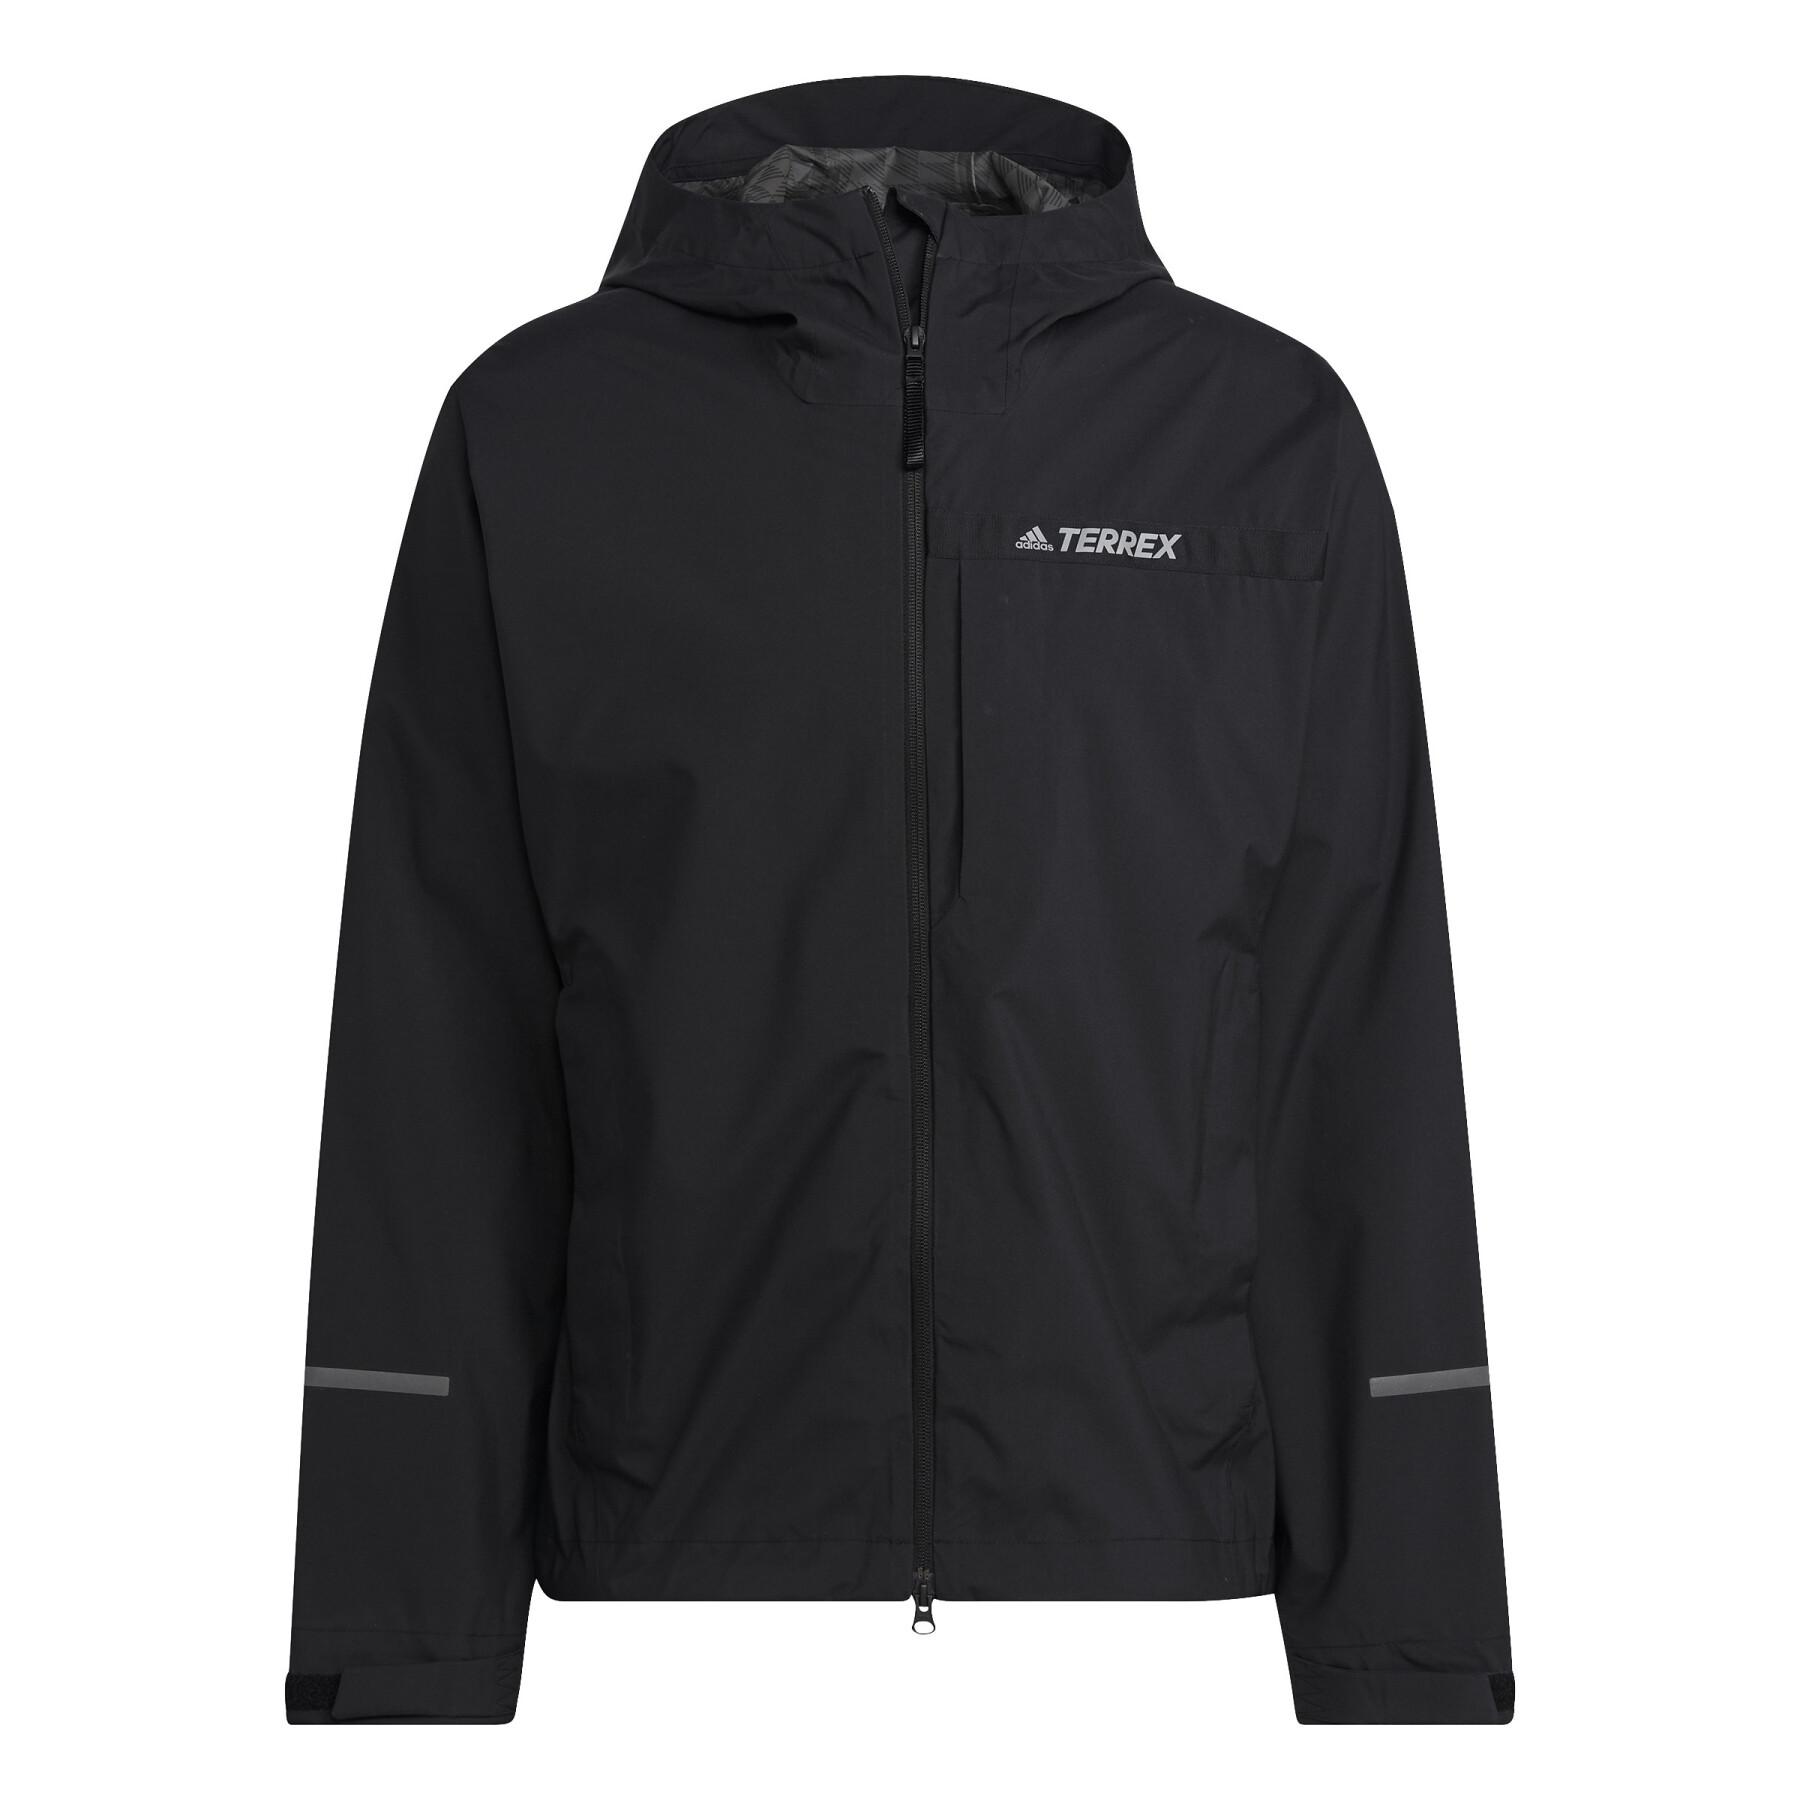 Hiking layer adidas Clothing Terrex - - Rain.Rdy waterproof 2.5 Multi - jacket Jackets